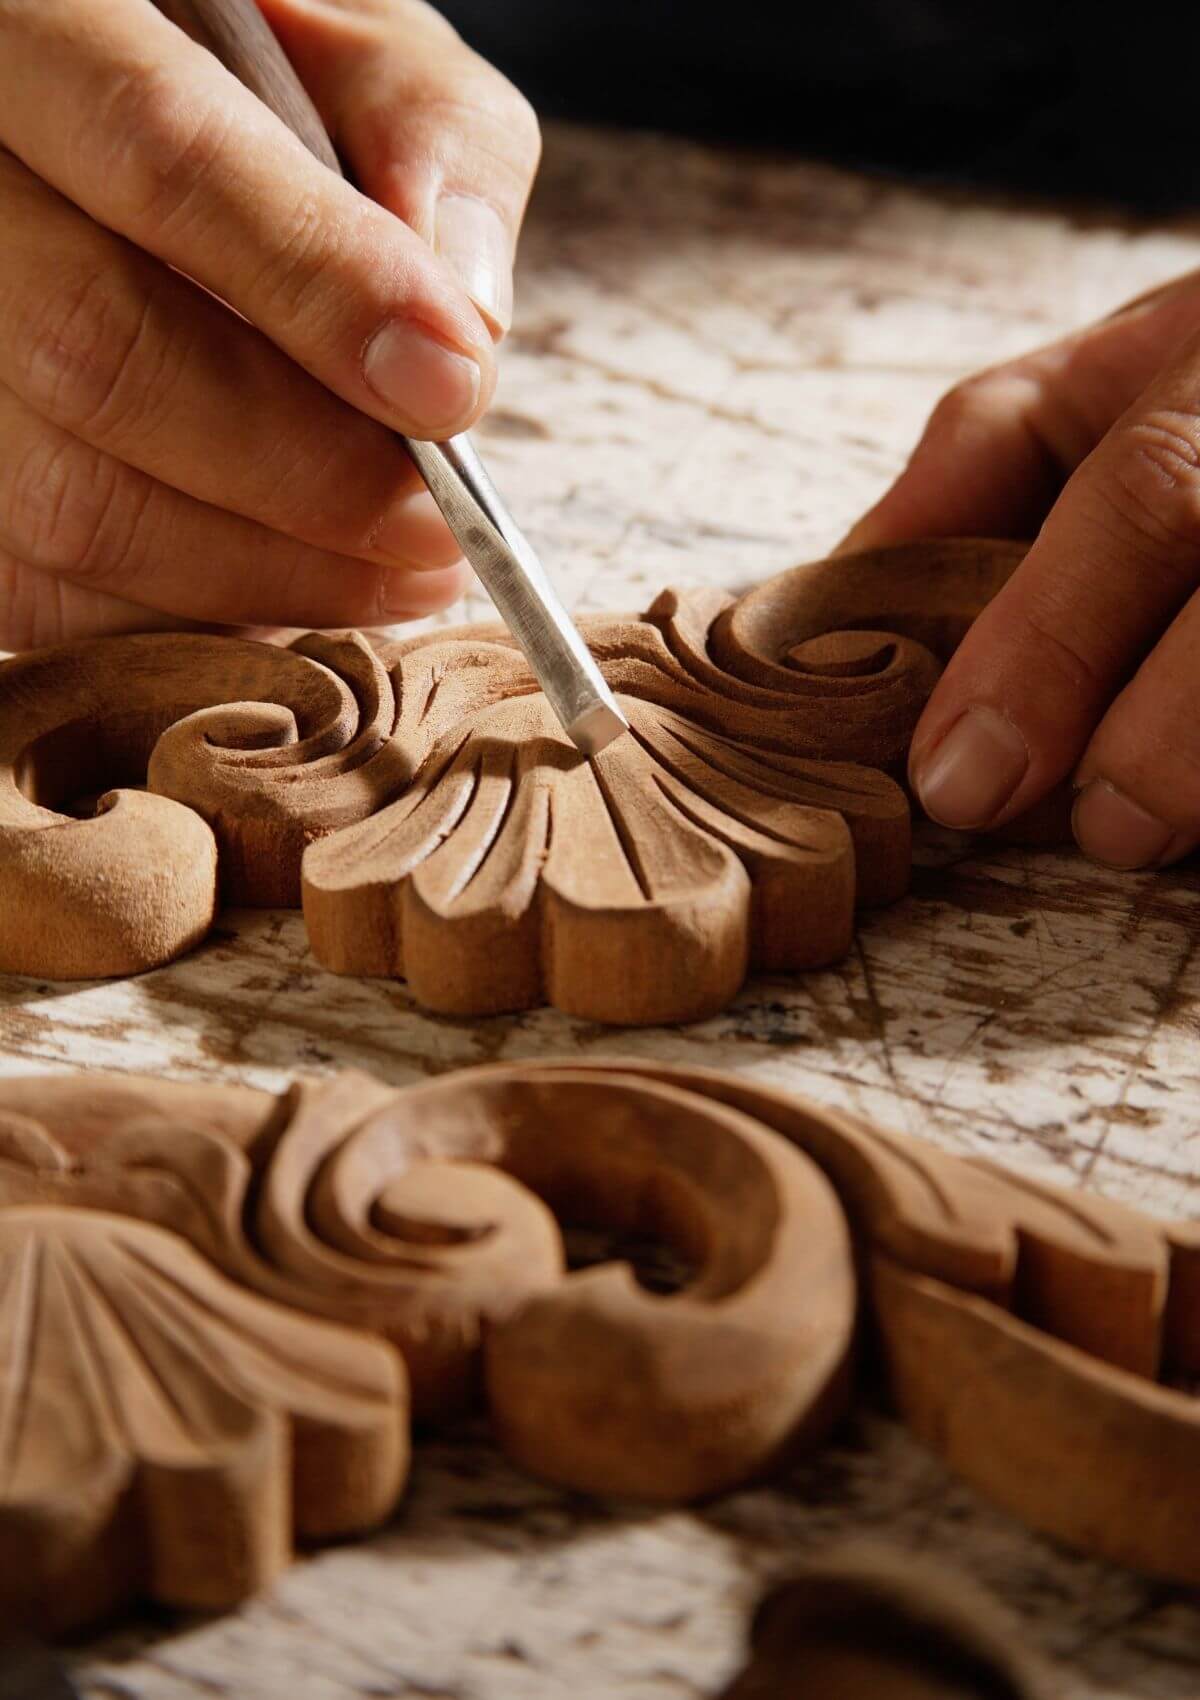 Cuban wood carving souvenirs